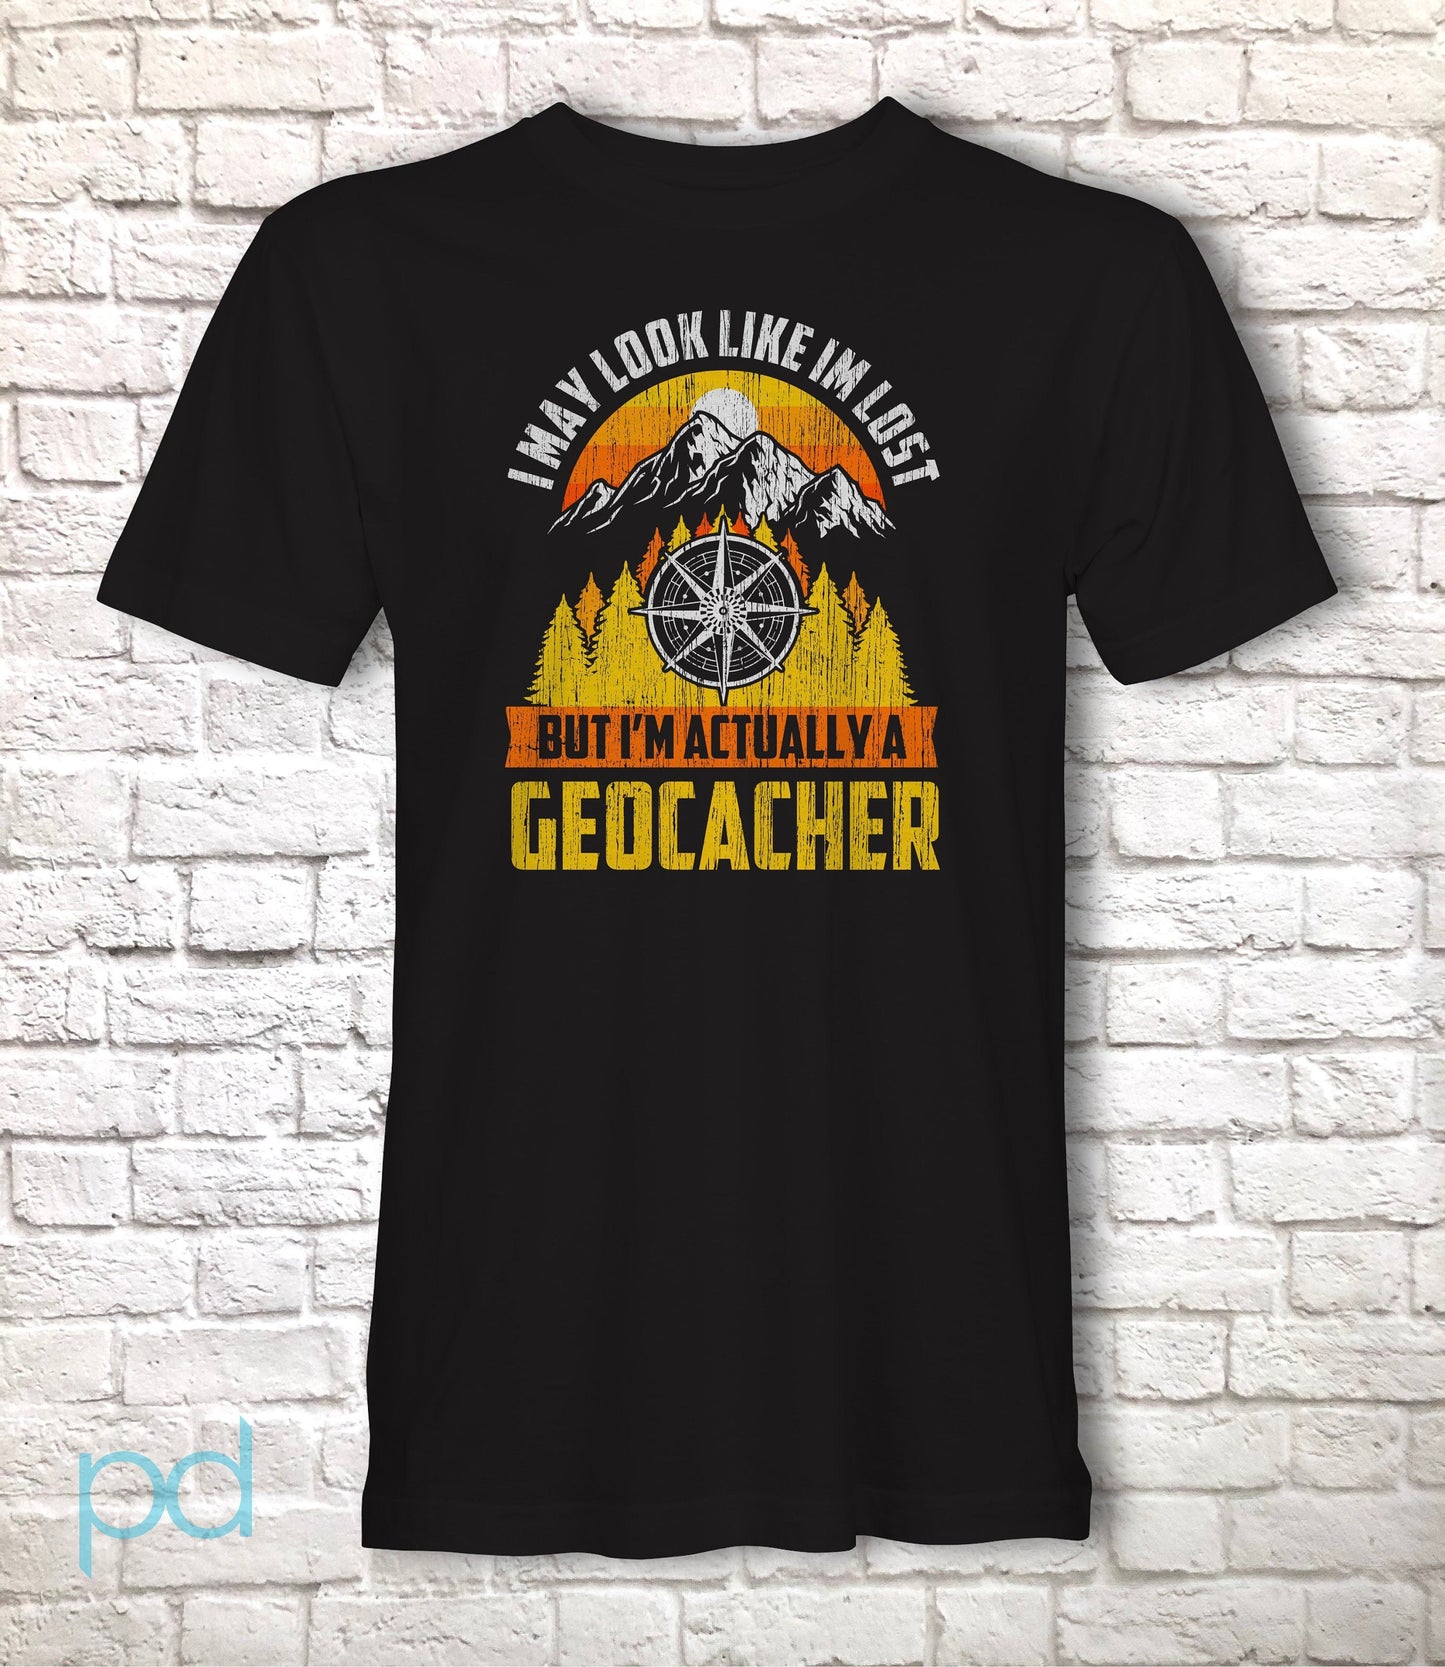 Funny Geocacher T-Shirt, Geocaching Gift Idea, Humorous GPS Satellites Treasure Hunter Graphic Print Tee Shirt Top